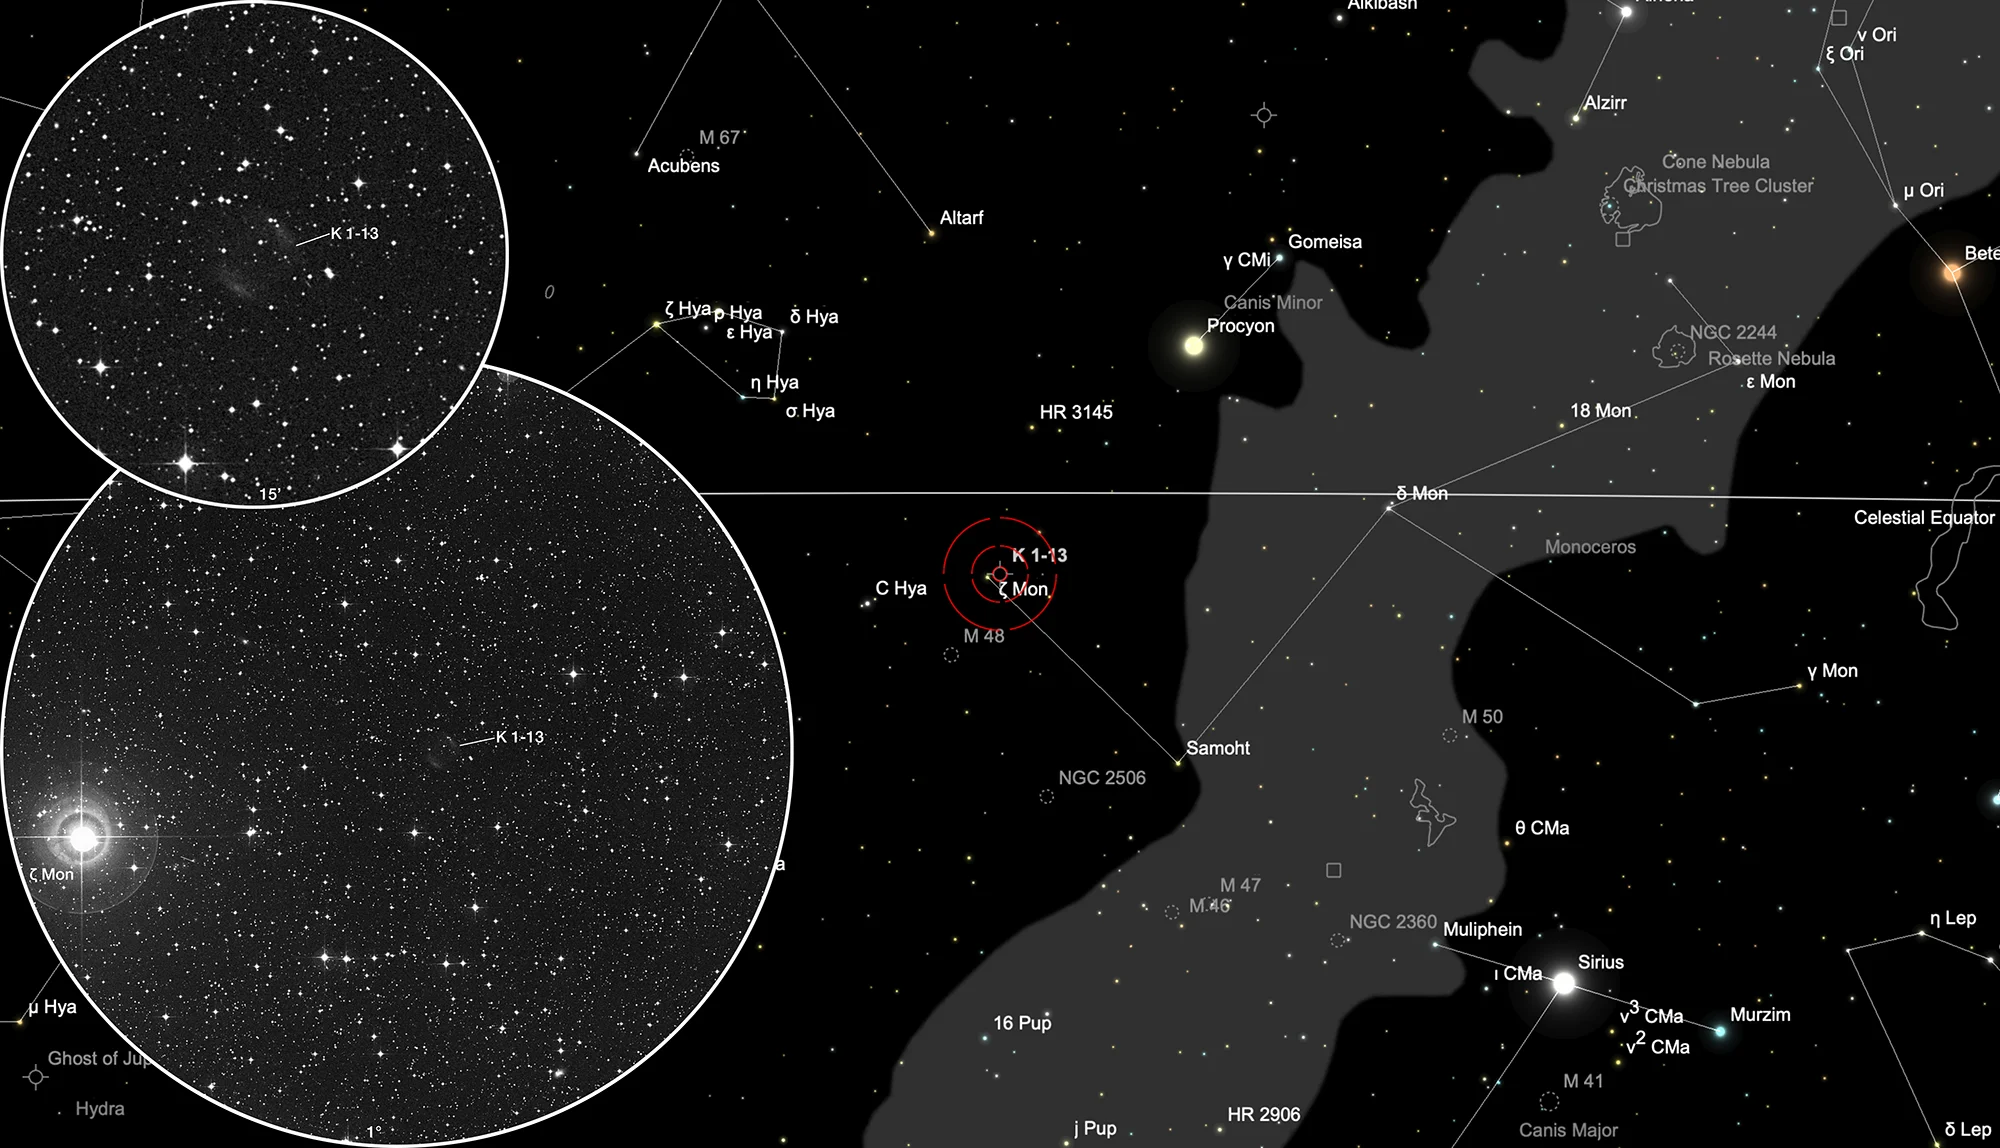 Finder Chart Planetary Nebula Kohoutek 1-13 (Abell 25)